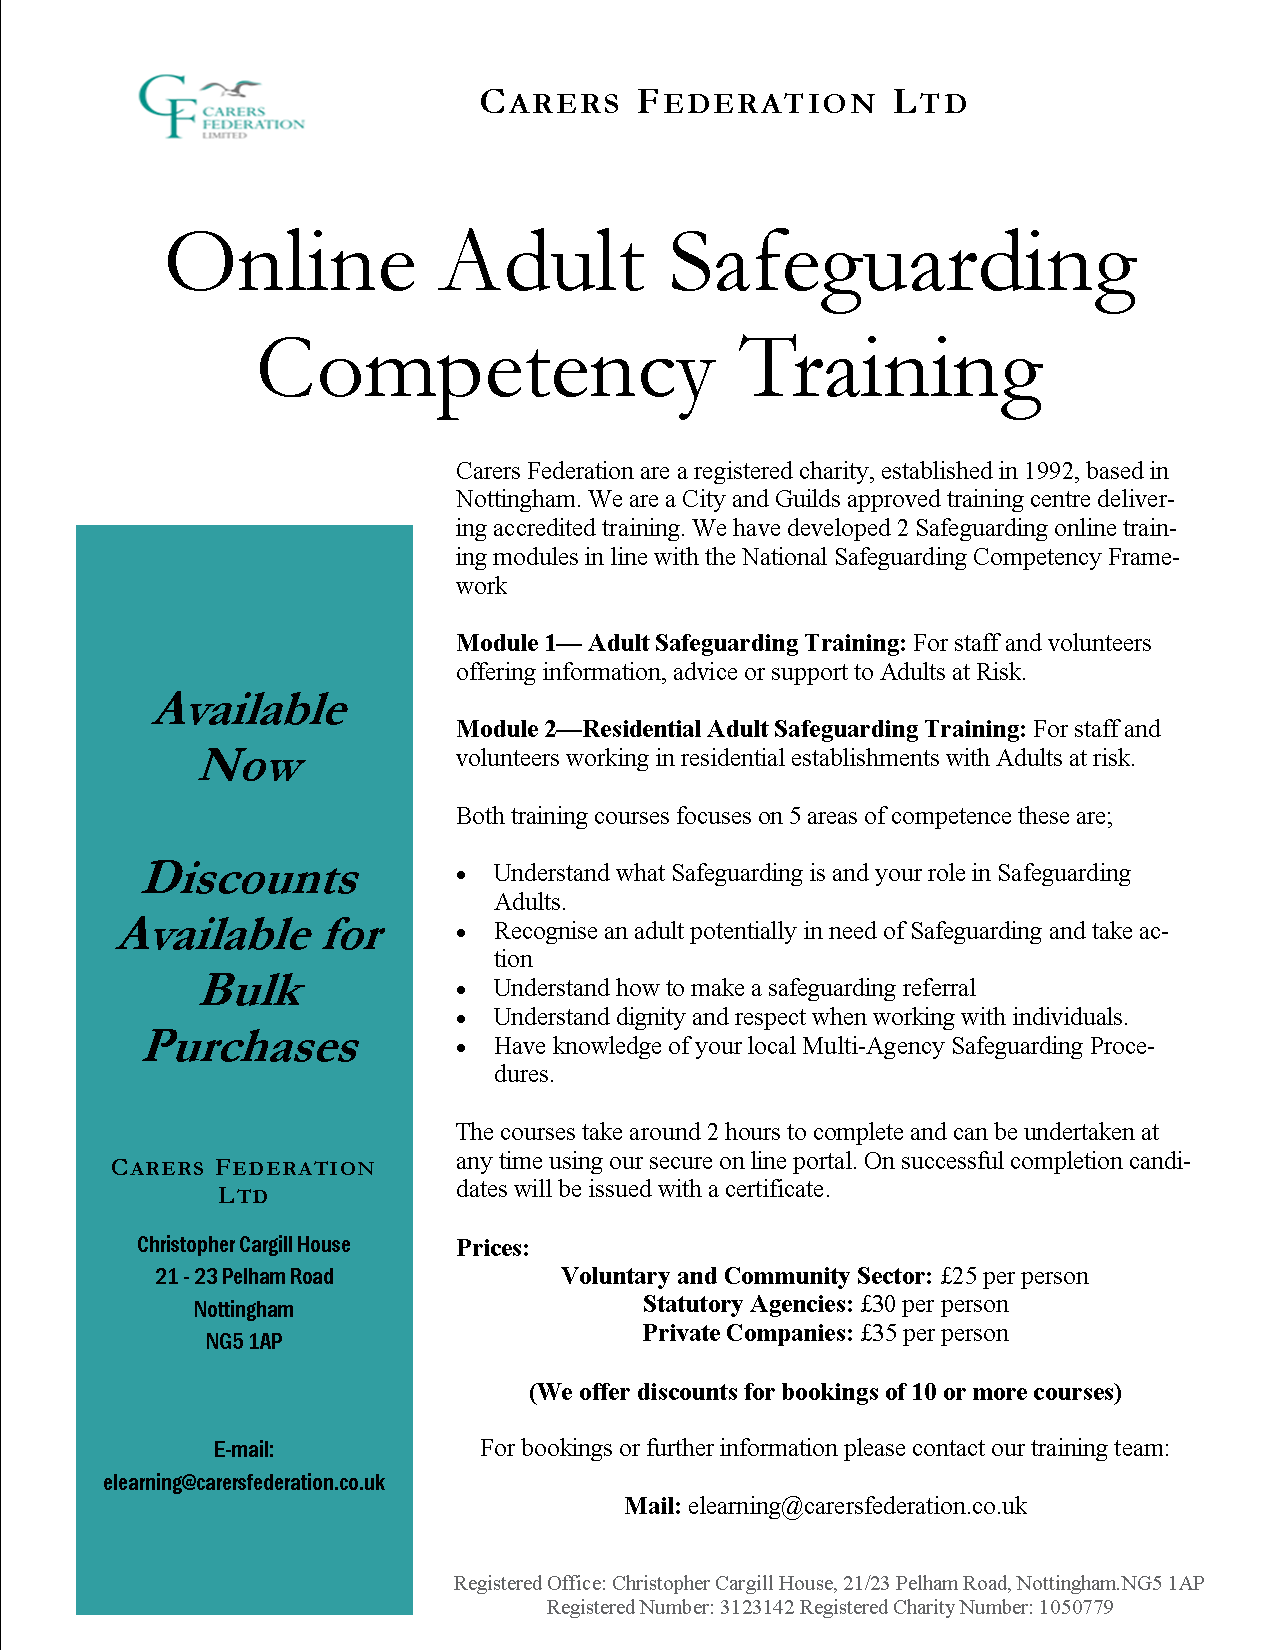 Annexe Safeguarding Training  flyer Feb 2019.png